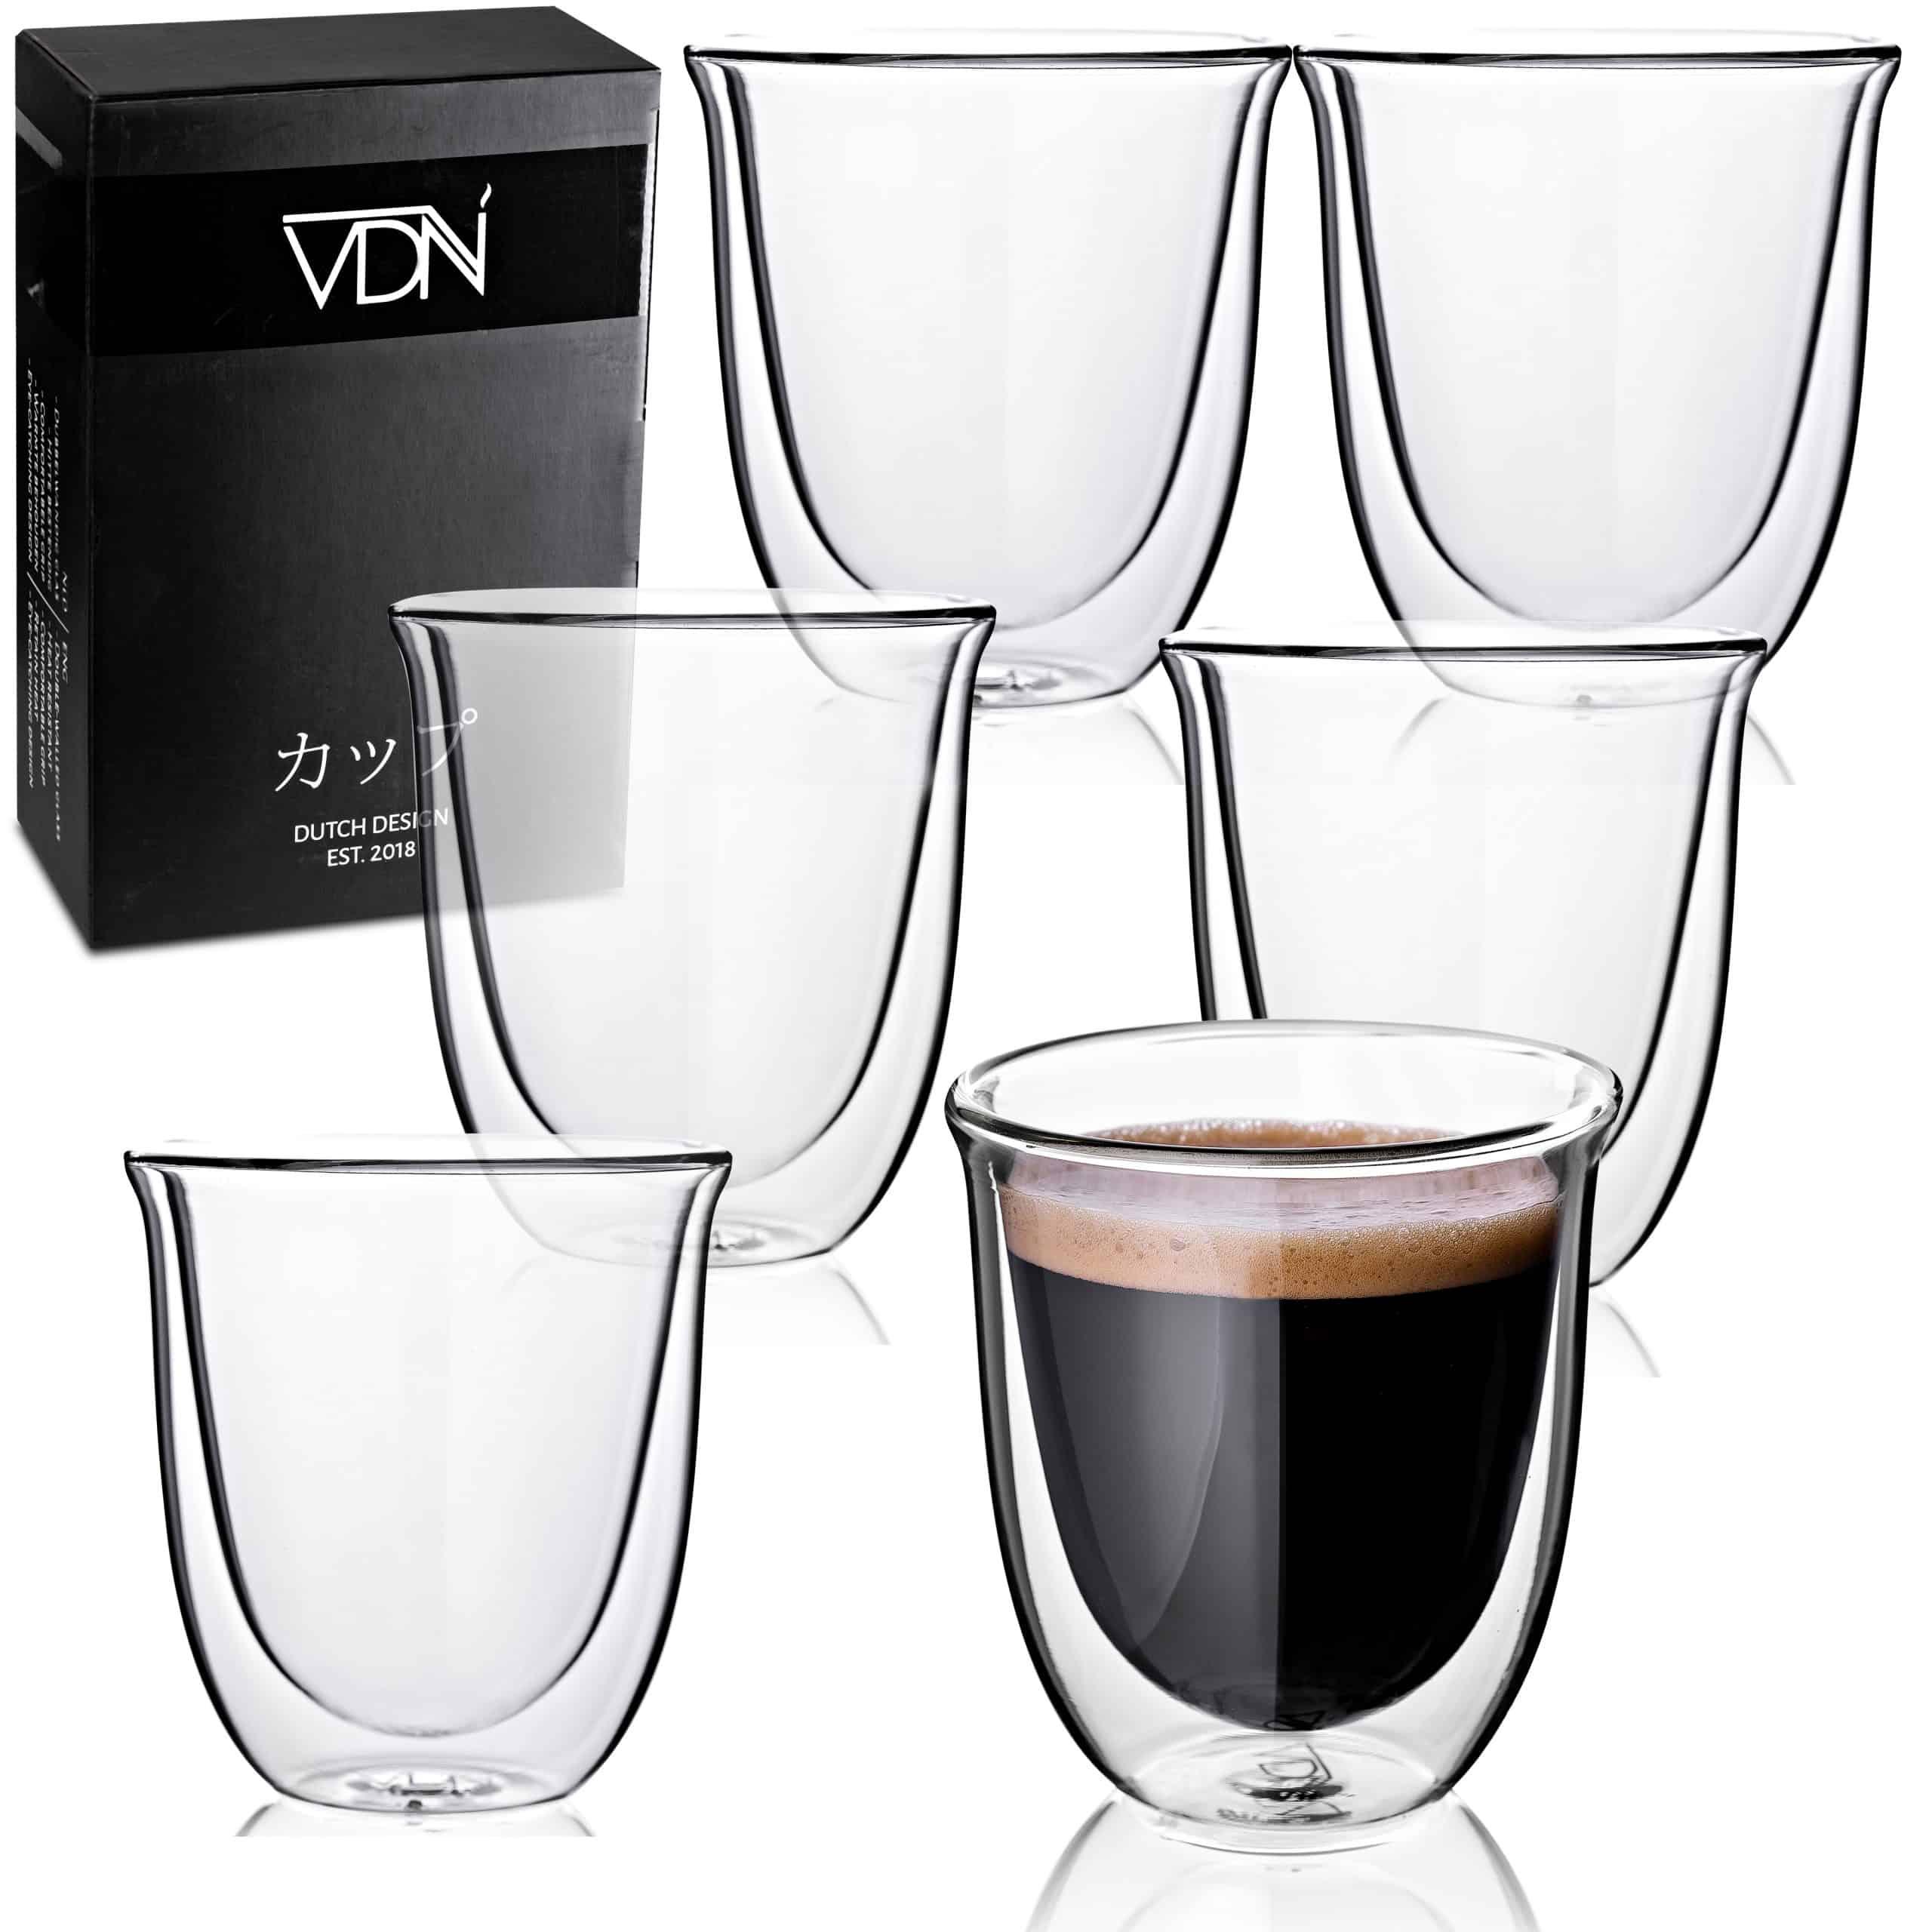 Ruim Weg huis browser Dubbelwandige glazen koffie - 250 ML - Set van 6 - VDN